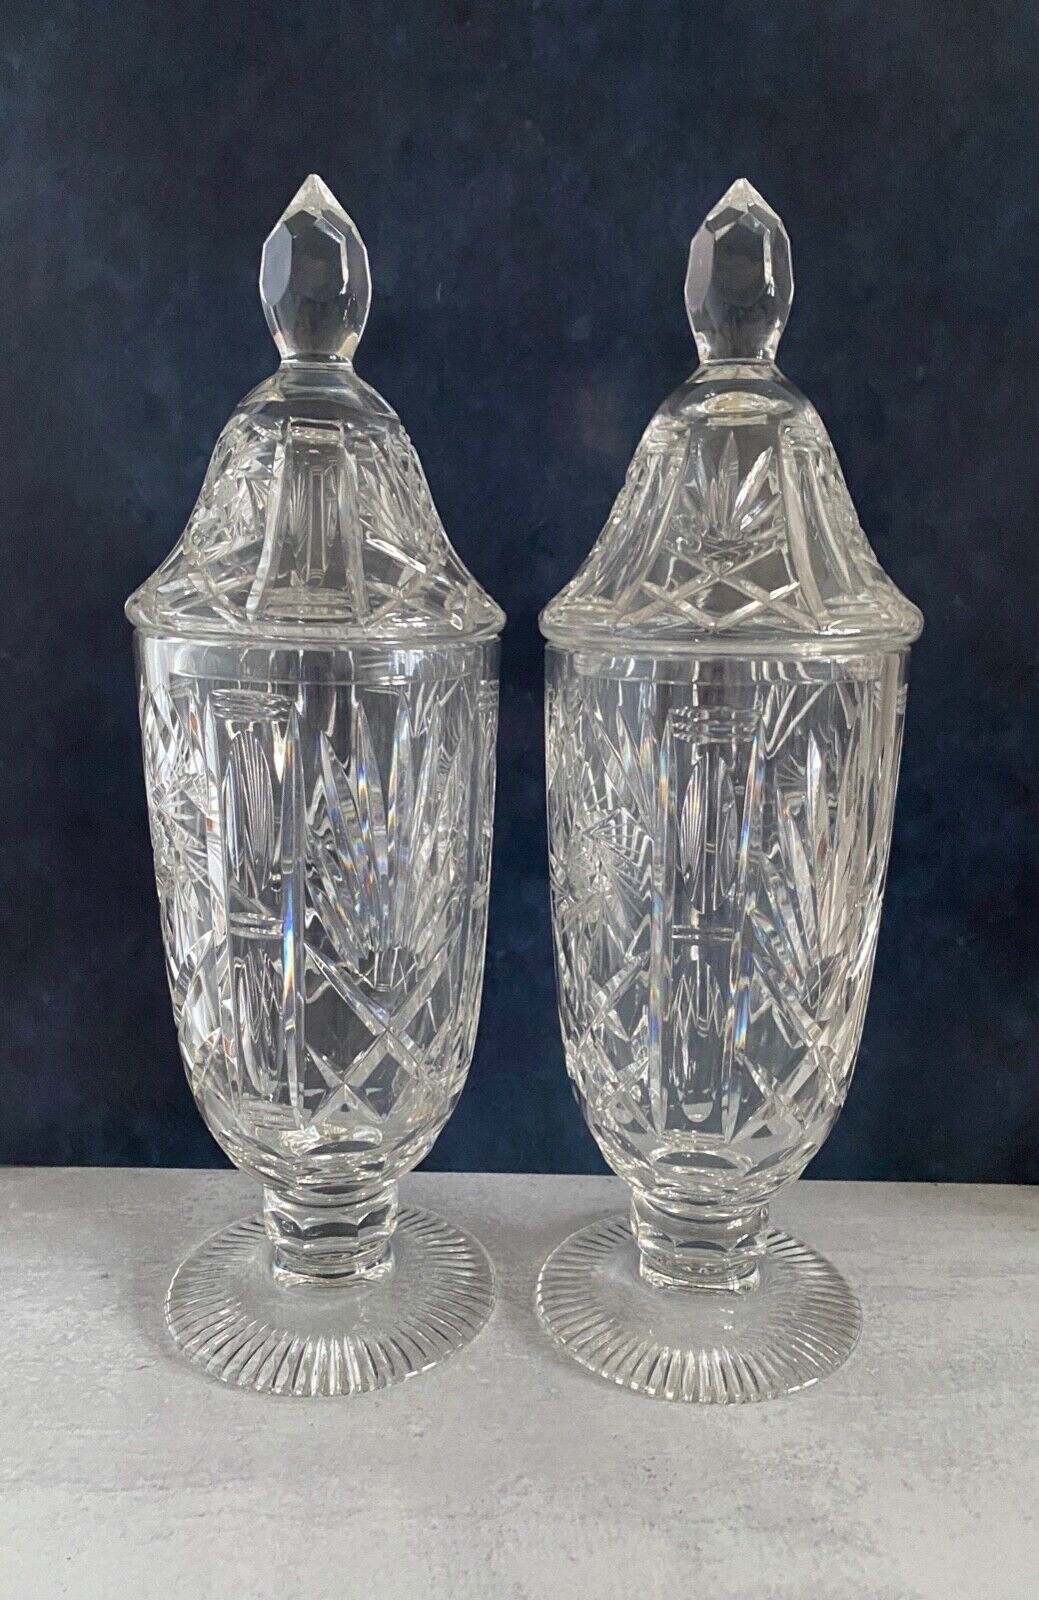 Antique Vintage European Cut Glass Apothecary Jars-large Ornate Pharmacy Jars